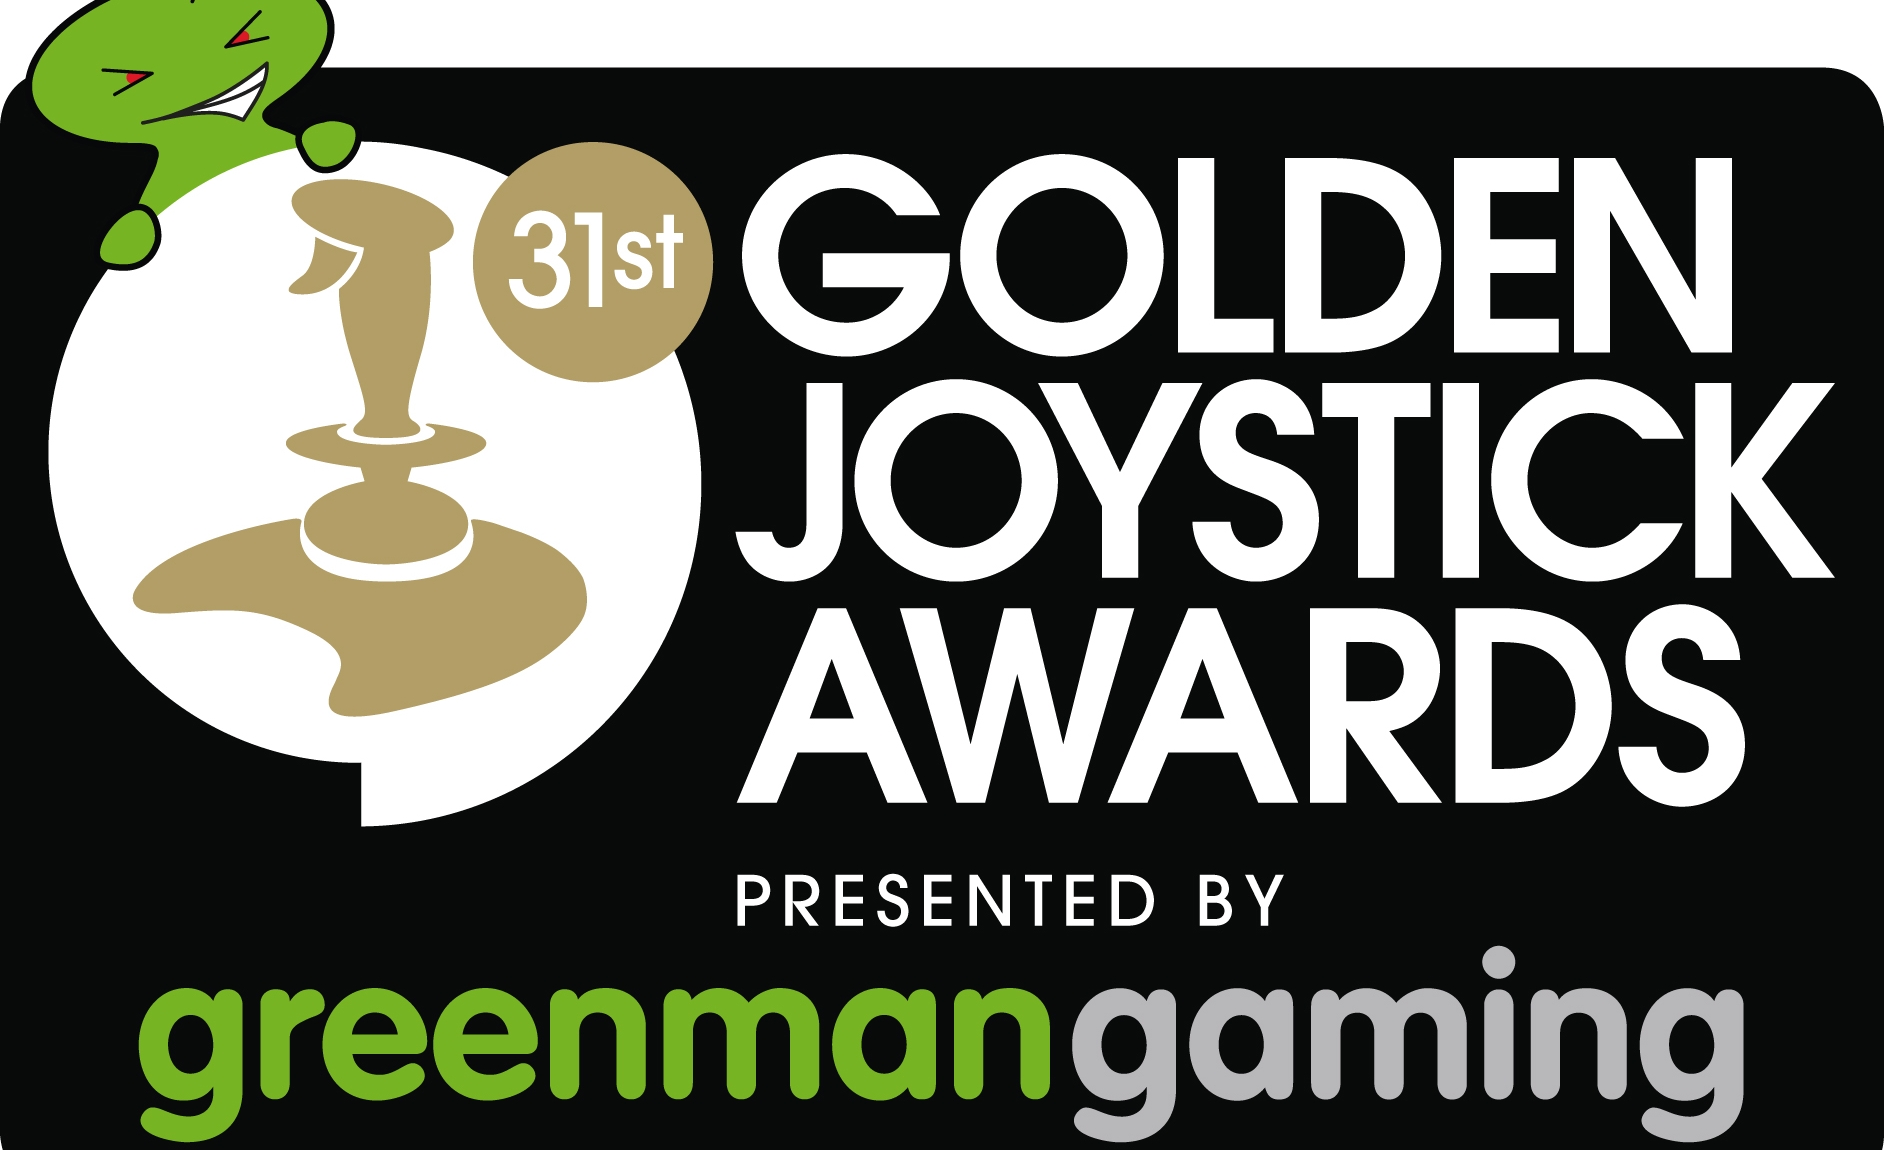 Kcas gold. Golden Joystick Awards. Green man Gaming. Golden Joystick Awards 2013. Золотой джойстик награда.